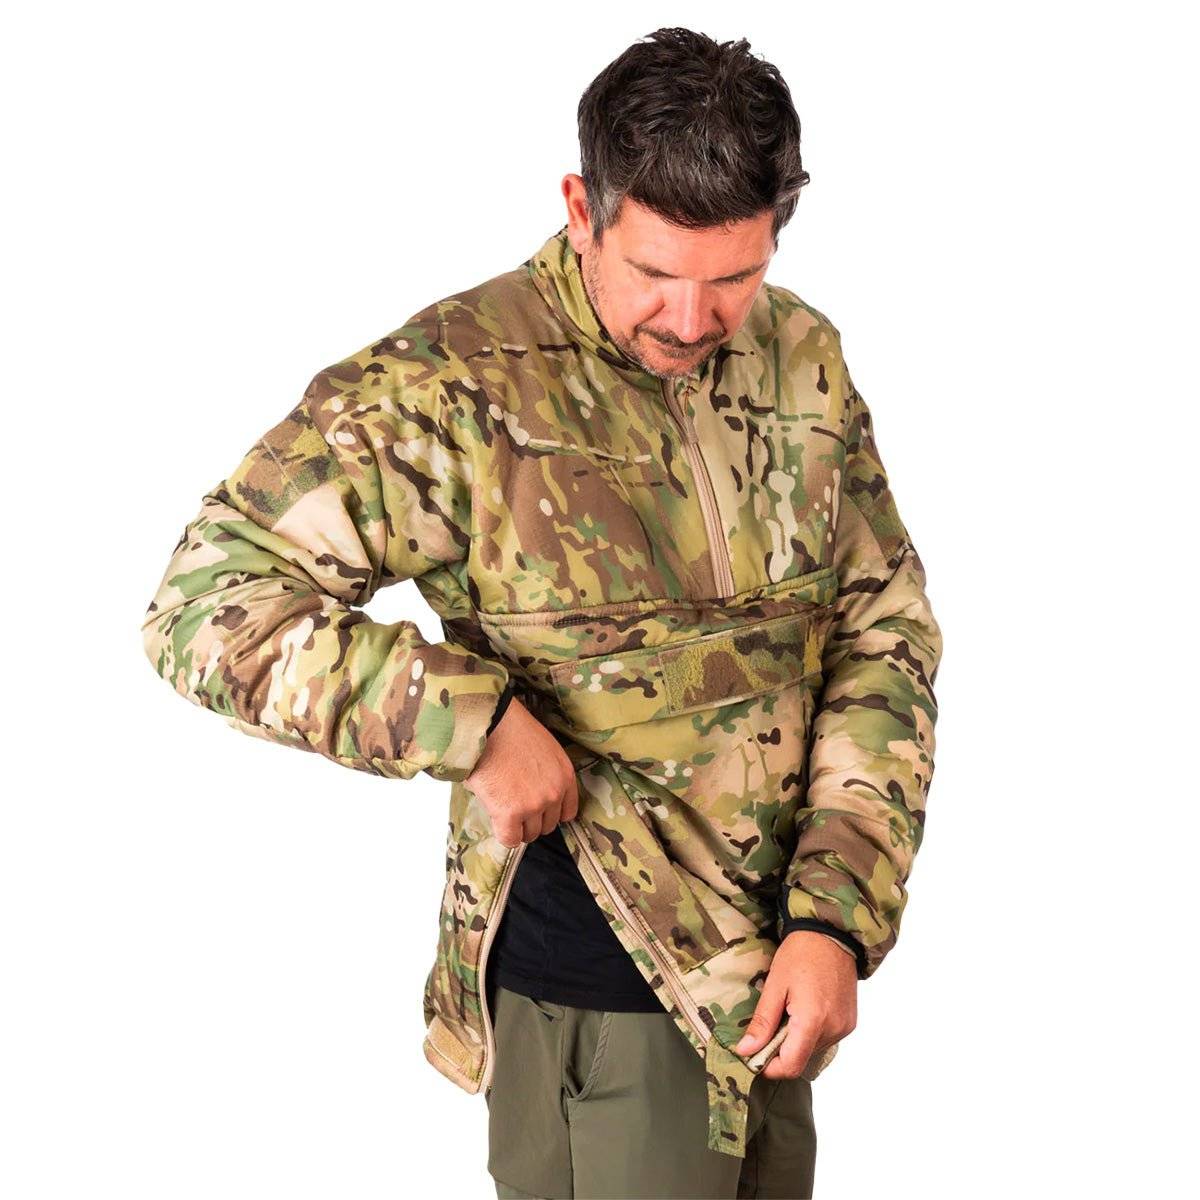 Snugpak Tactical Softie Smock Multicam - John Bull Clothing